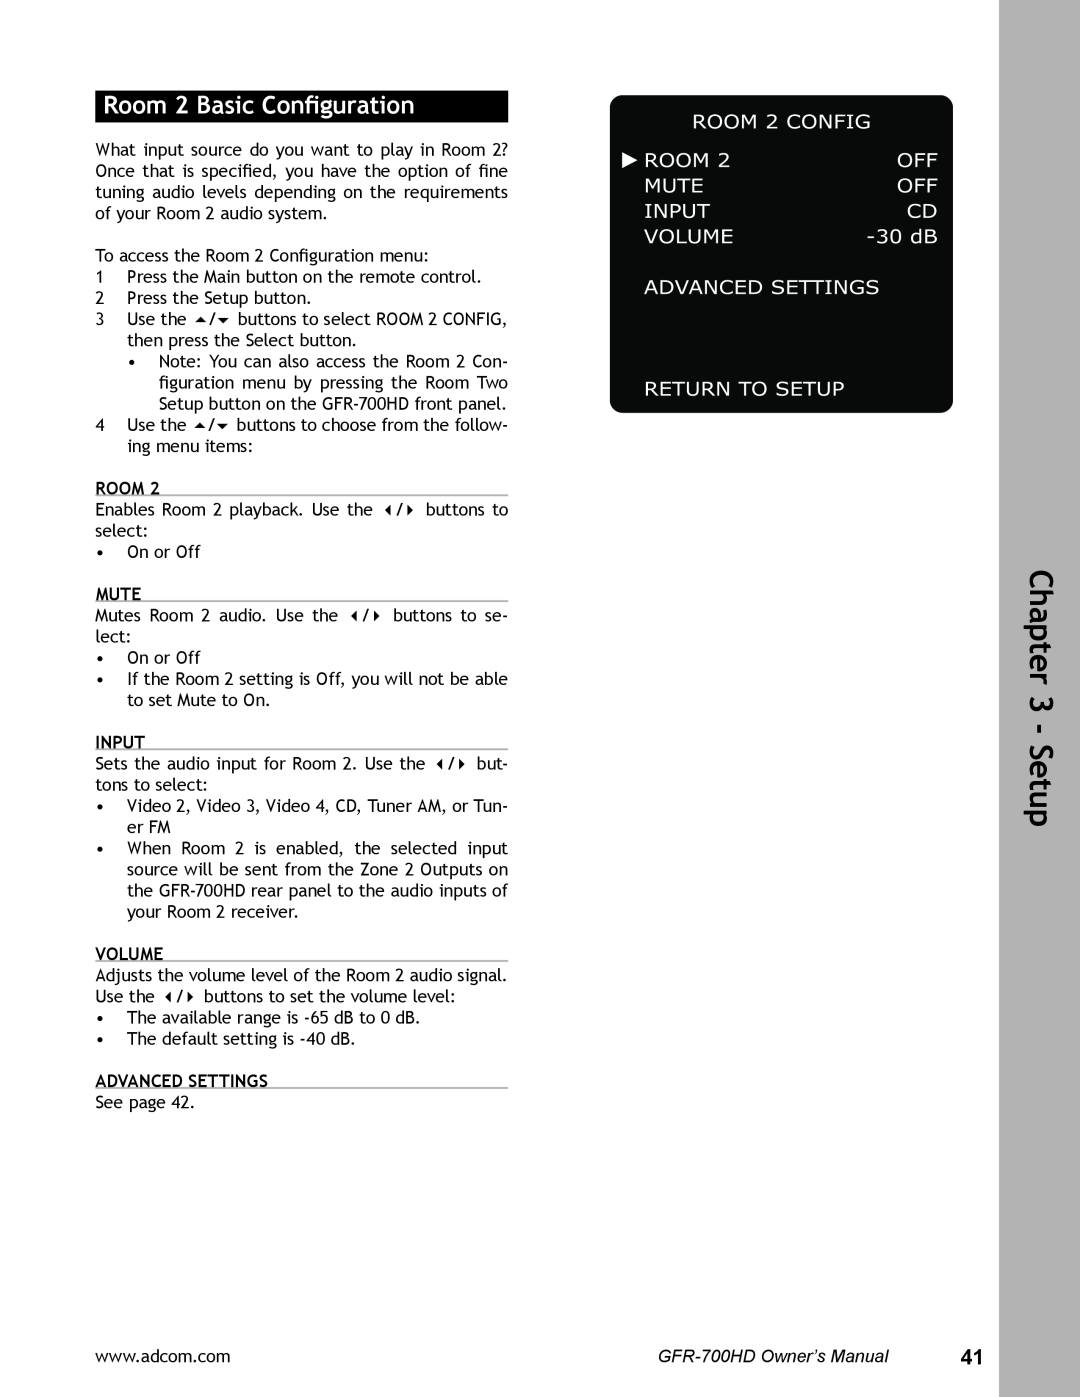 Adcom GFR-700HD user manual Room 2 Basic Conﬁguration, Mute, Advanced Settings, Setup, Input, Volume 